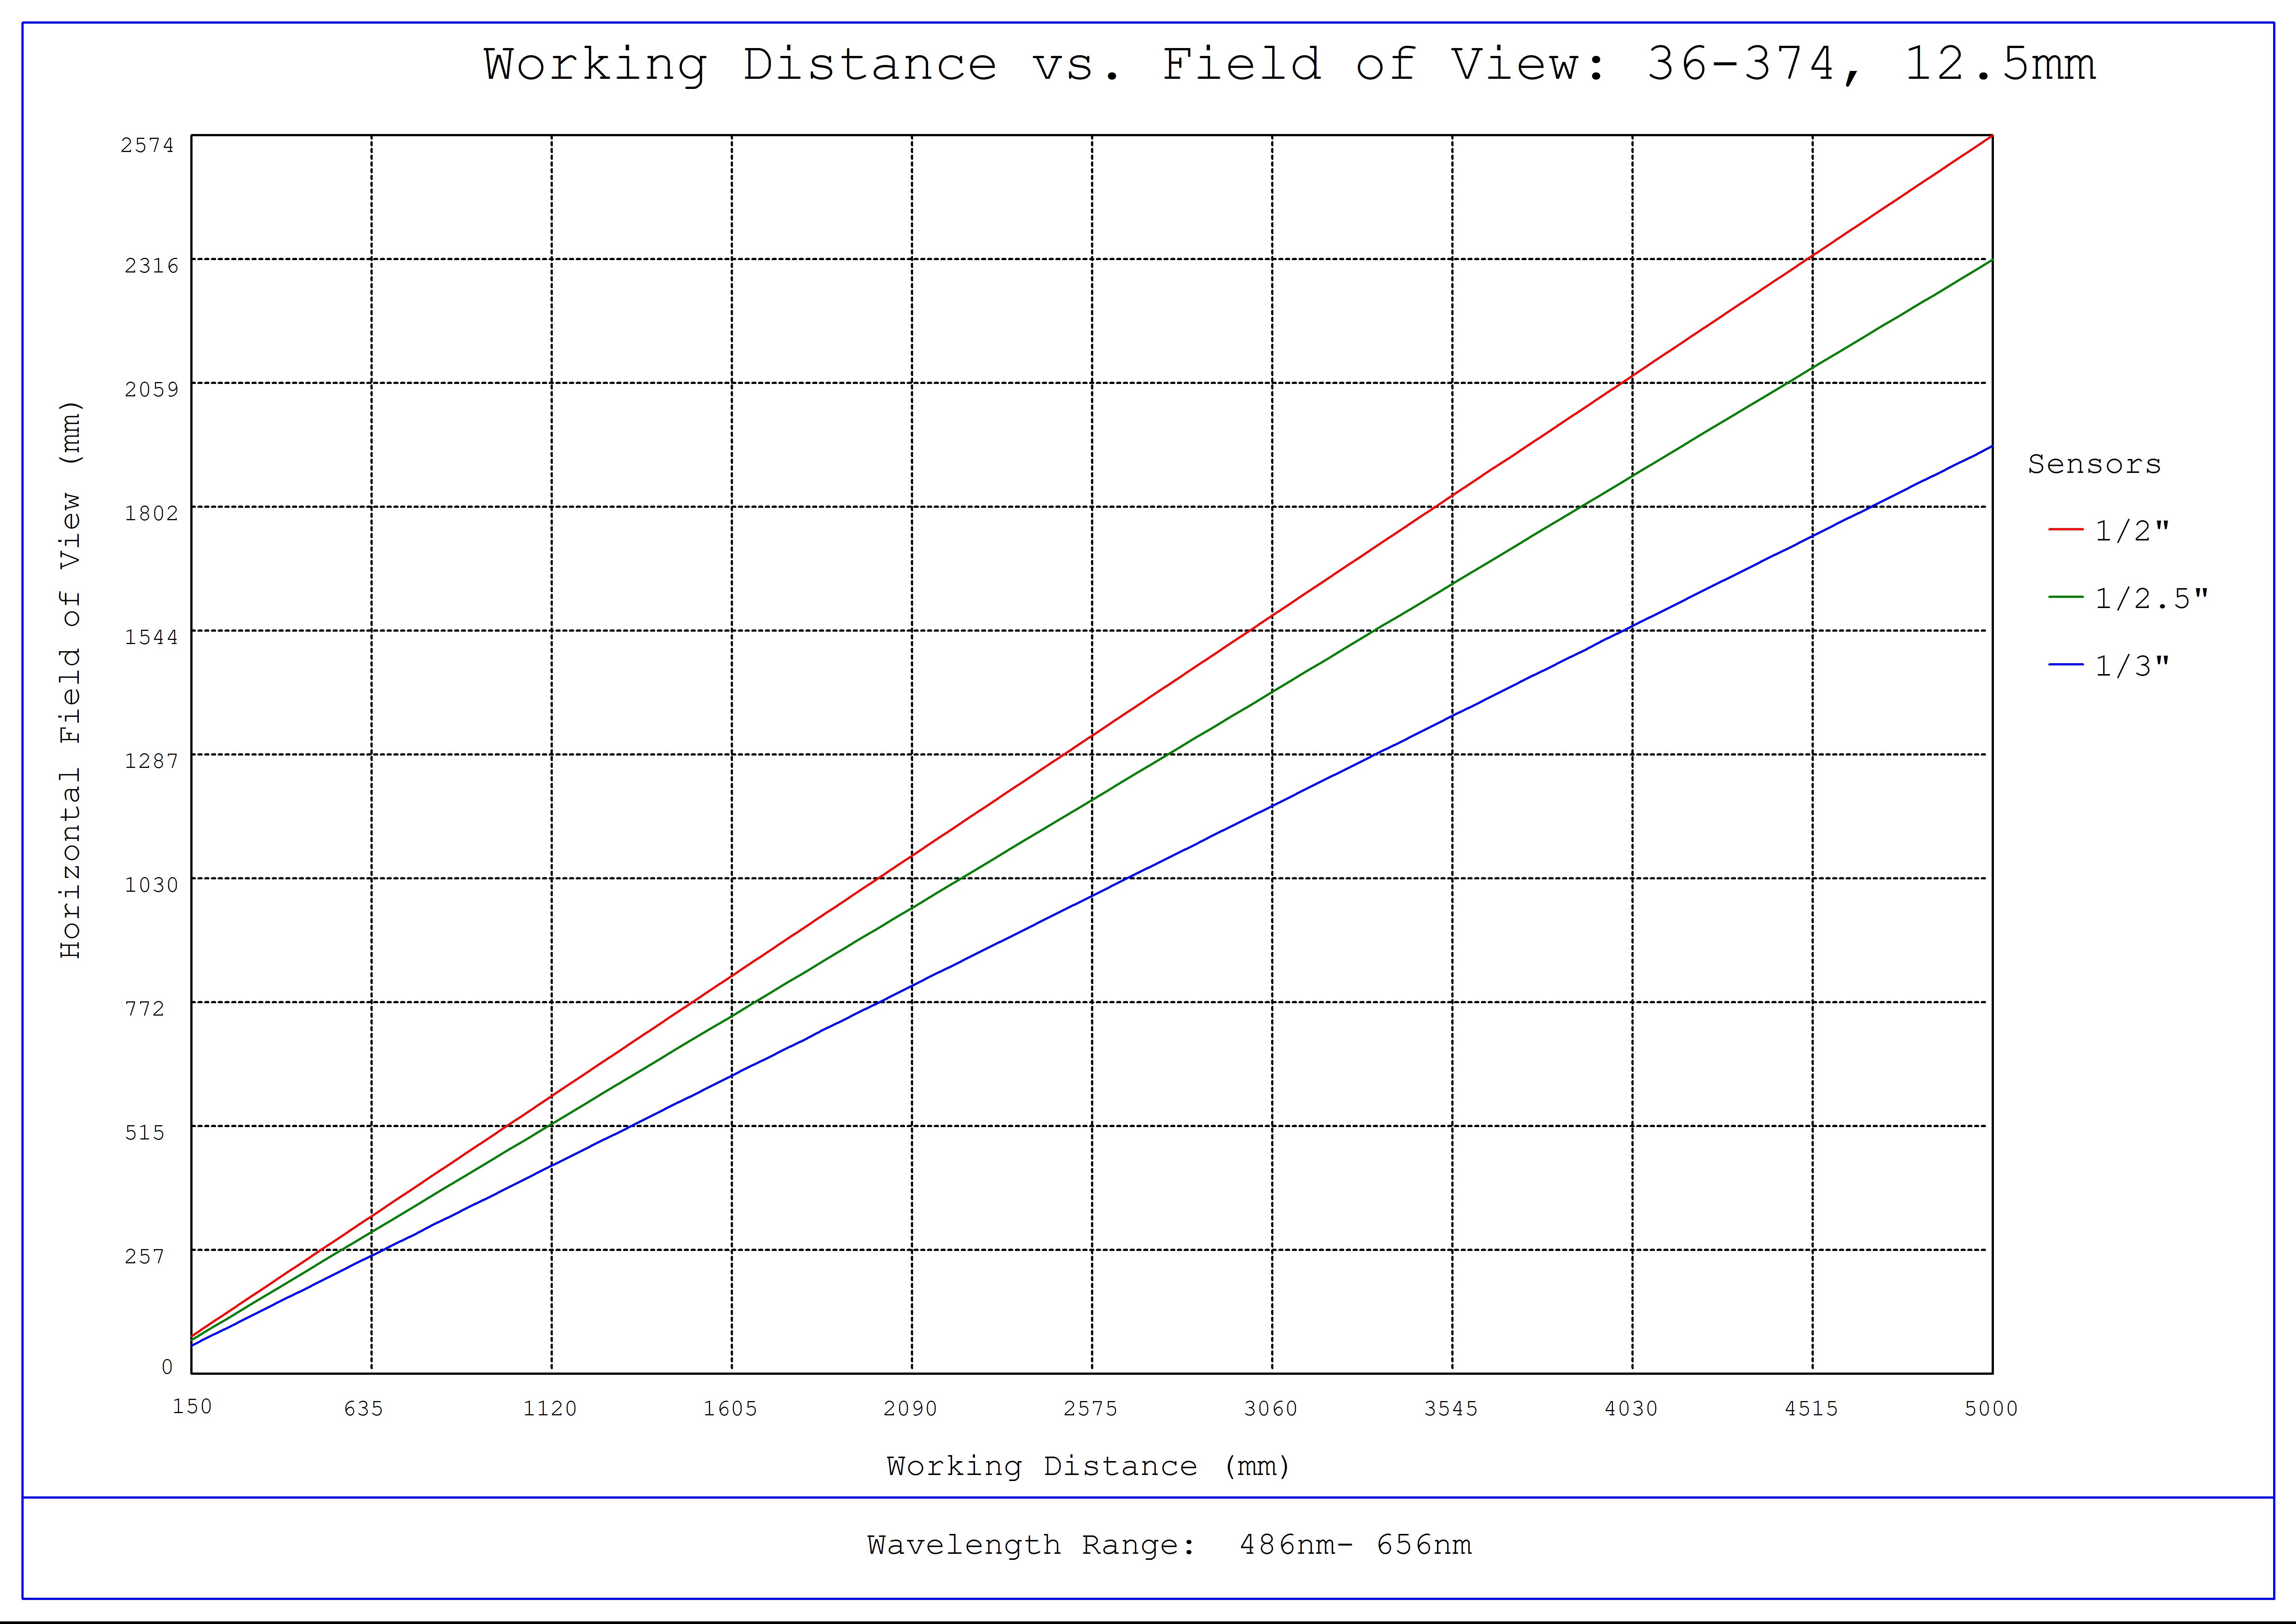 #36-374, 12.5mm FL f/5.6, Rugged Blue Series M12 Lens, Working Distance versus Field of View Plot